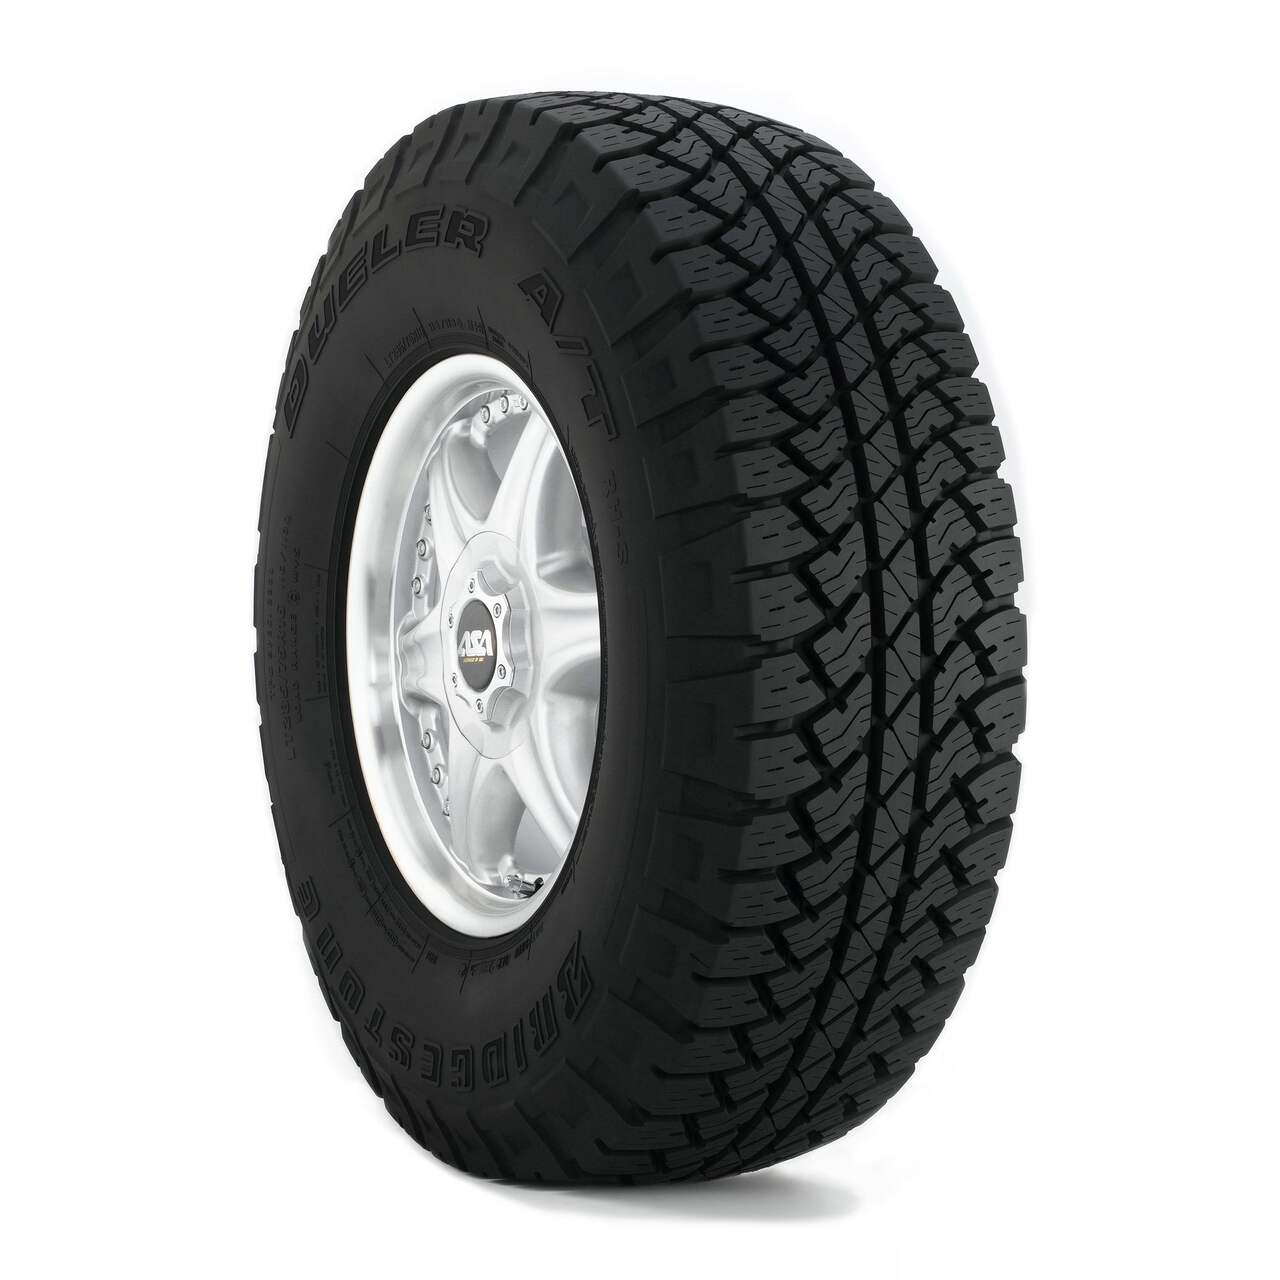 Bridgestone Dueler A/T RH-S All Terrain Tire For Truck & SUV